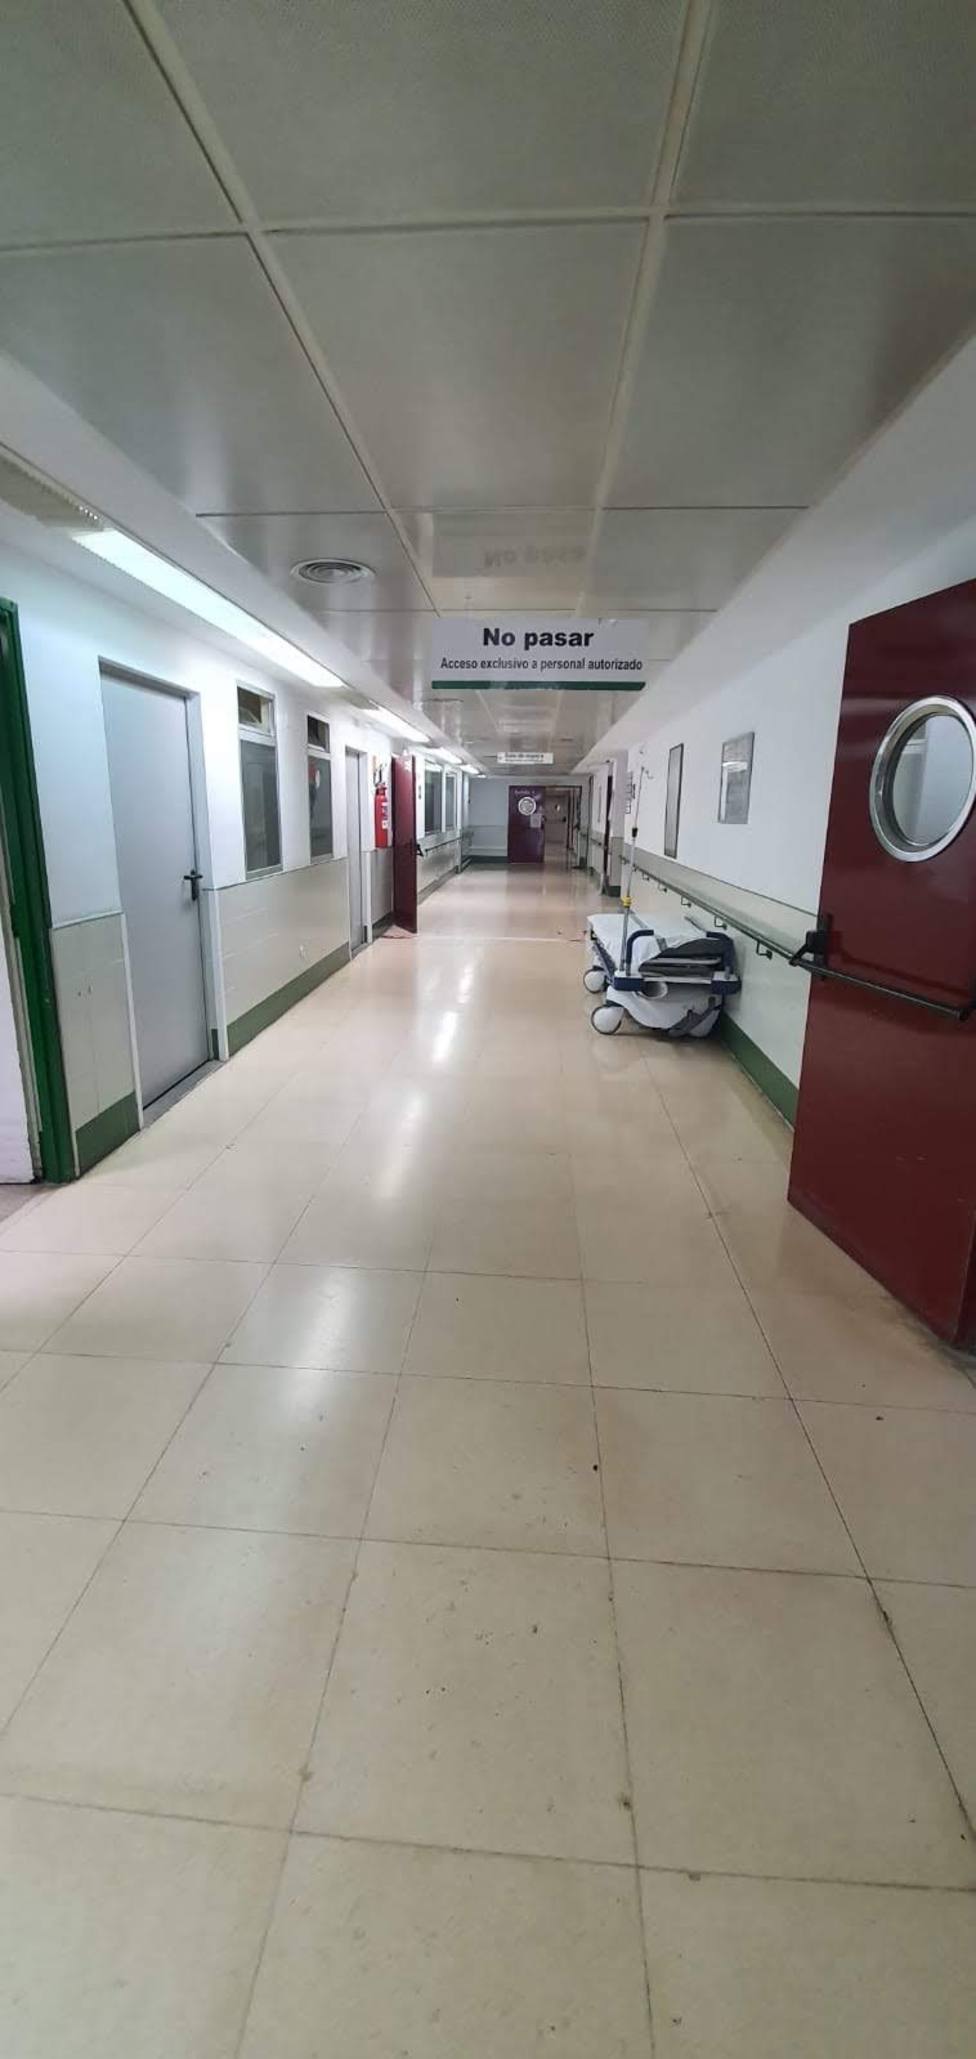 ctv-aab-pasillo-hospital-de-plasencia